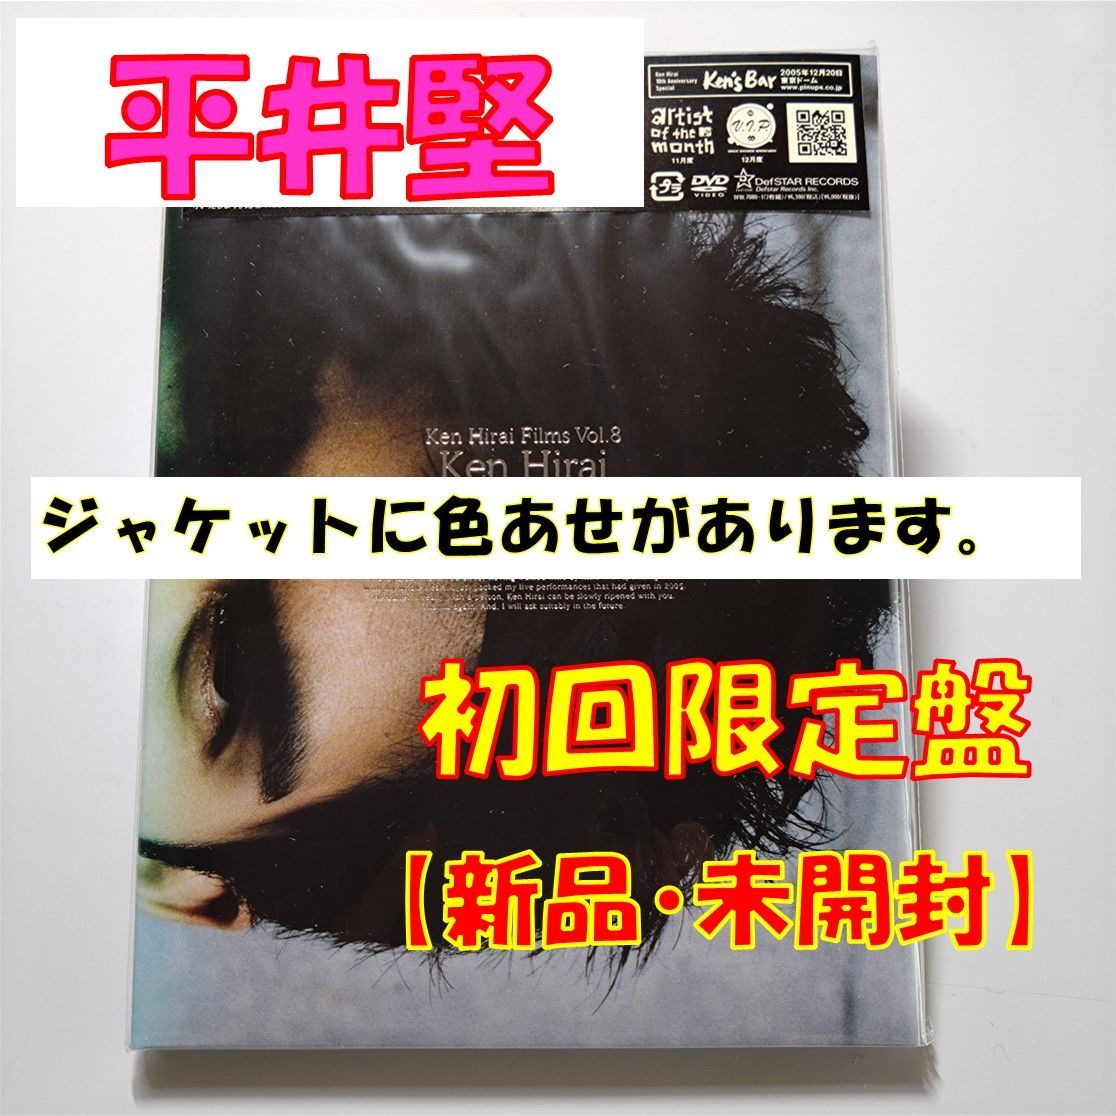 DVD】平井堅【Ken Hirai Films Vol.8 “Ken Hirai 10th Anniversary Tour Final at  Saitama Super Arena”】【初回生産限定盤】【新品 未開封】【匿名配送】即購入OK - メルカリ